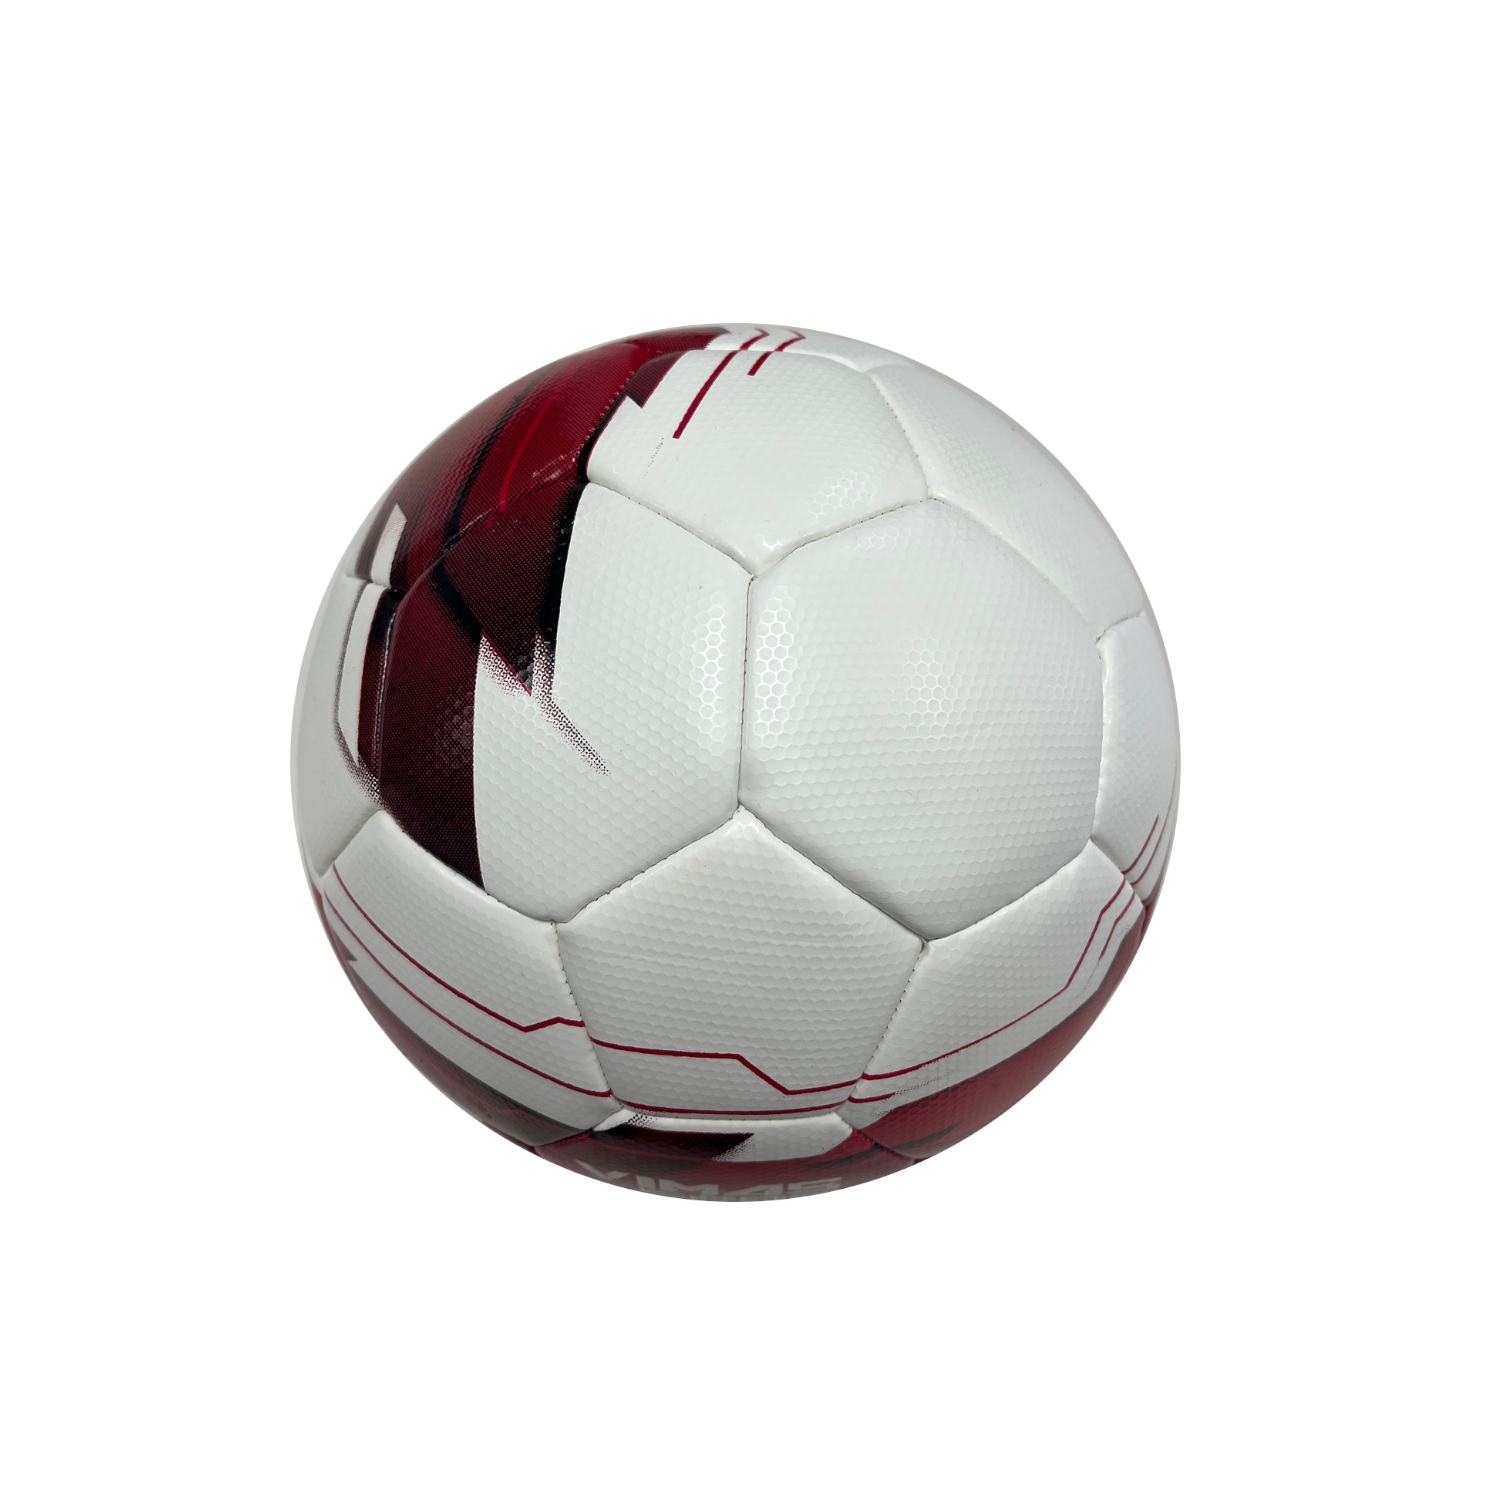 Balon Futbol Vimas Sport Future 3.0 - Balon Futbol Future 3.0 Talla 4  MKP